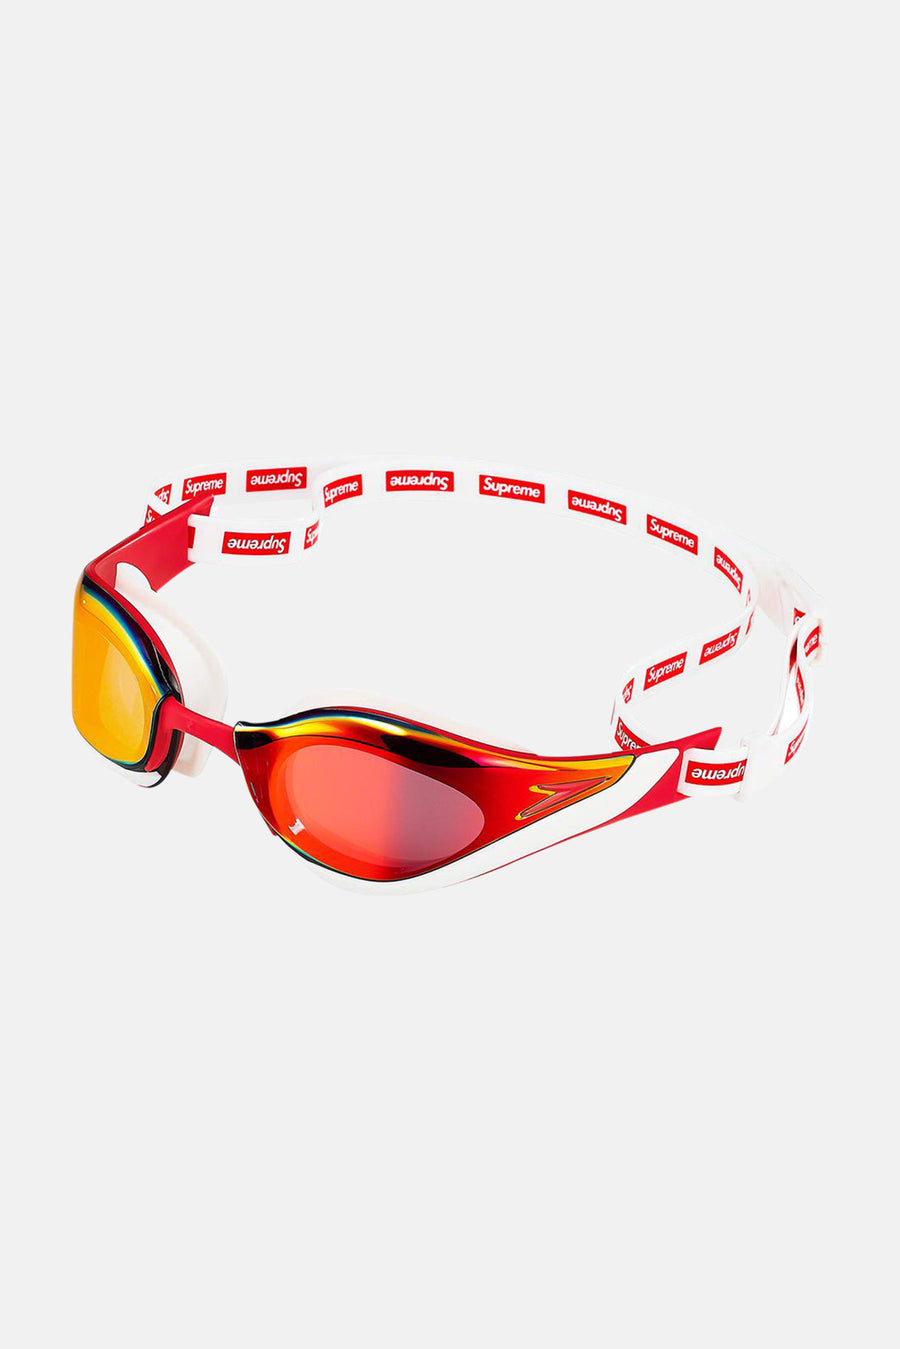 Speedo Swim Goggles White/Red